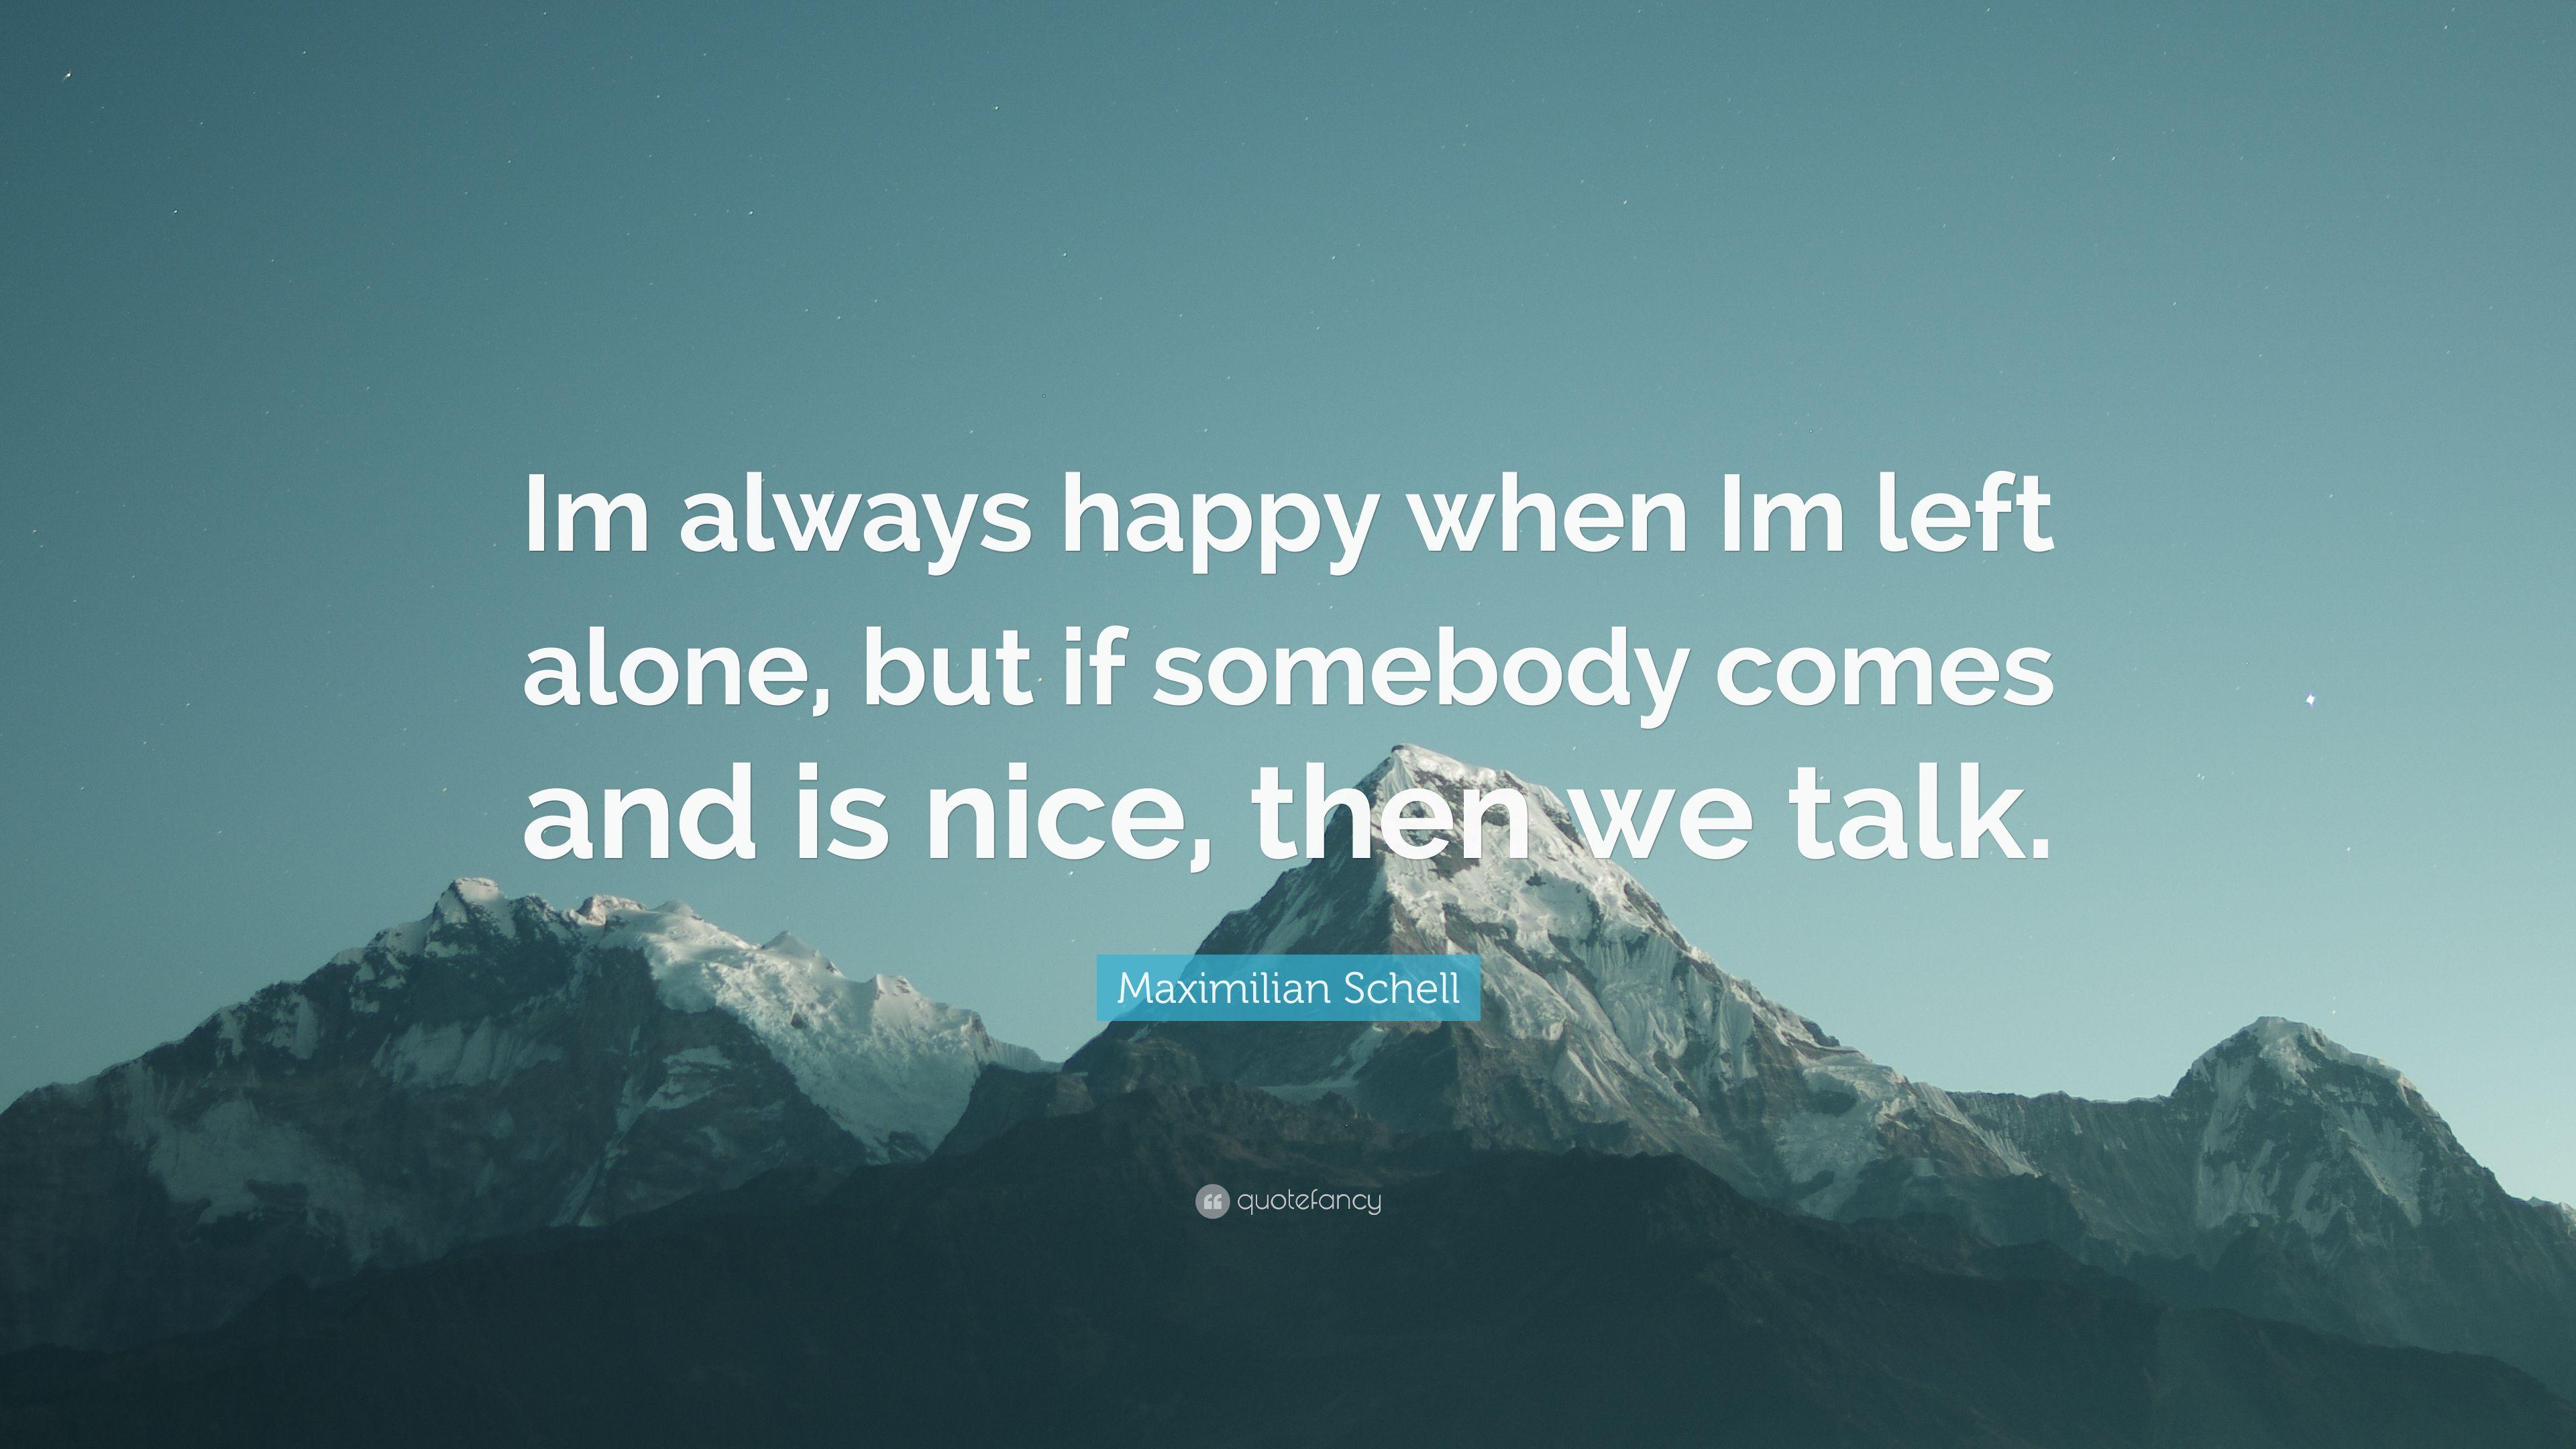 Maximilian Schell Quote: “Im always happy when Im left alone, but if